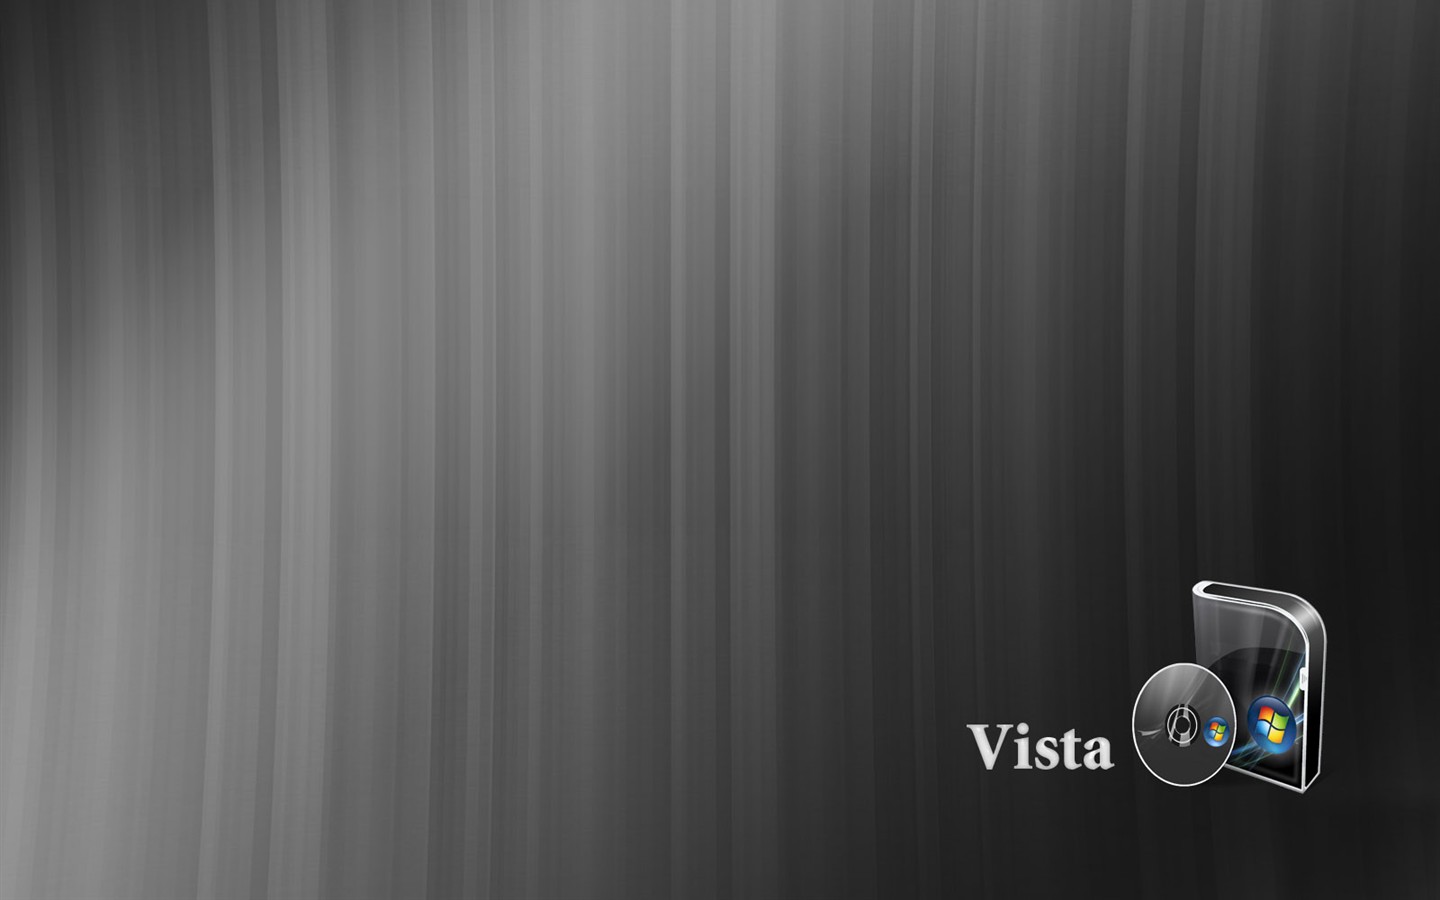  Vistaの壁紙アルバム #16 - 1440x900